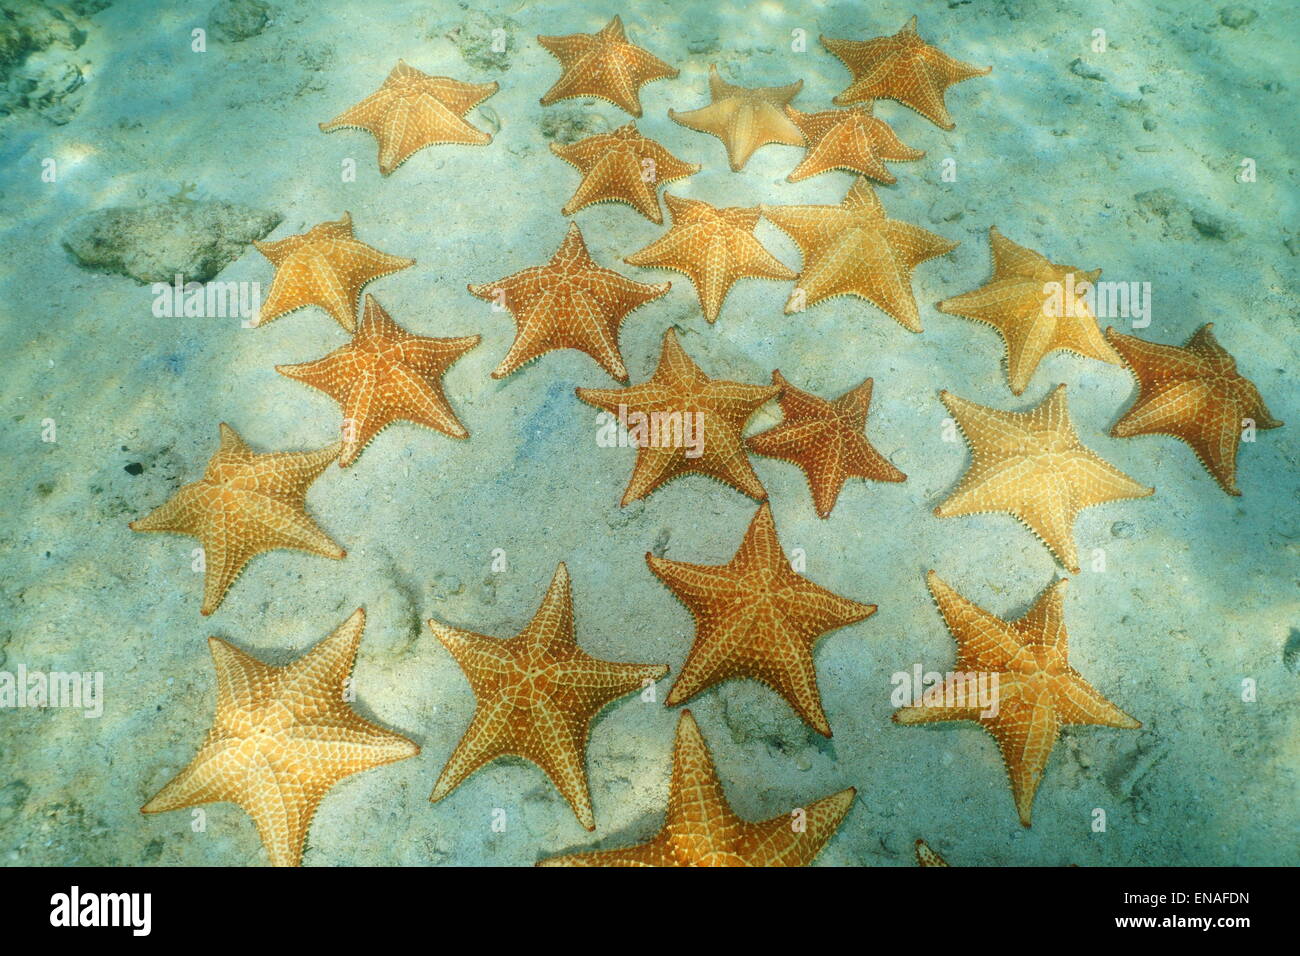 Starfishes underwater, Cushion sea stars Oreaster reticulatus, on sandy seafloor in the Caribbean sea Stock Photo